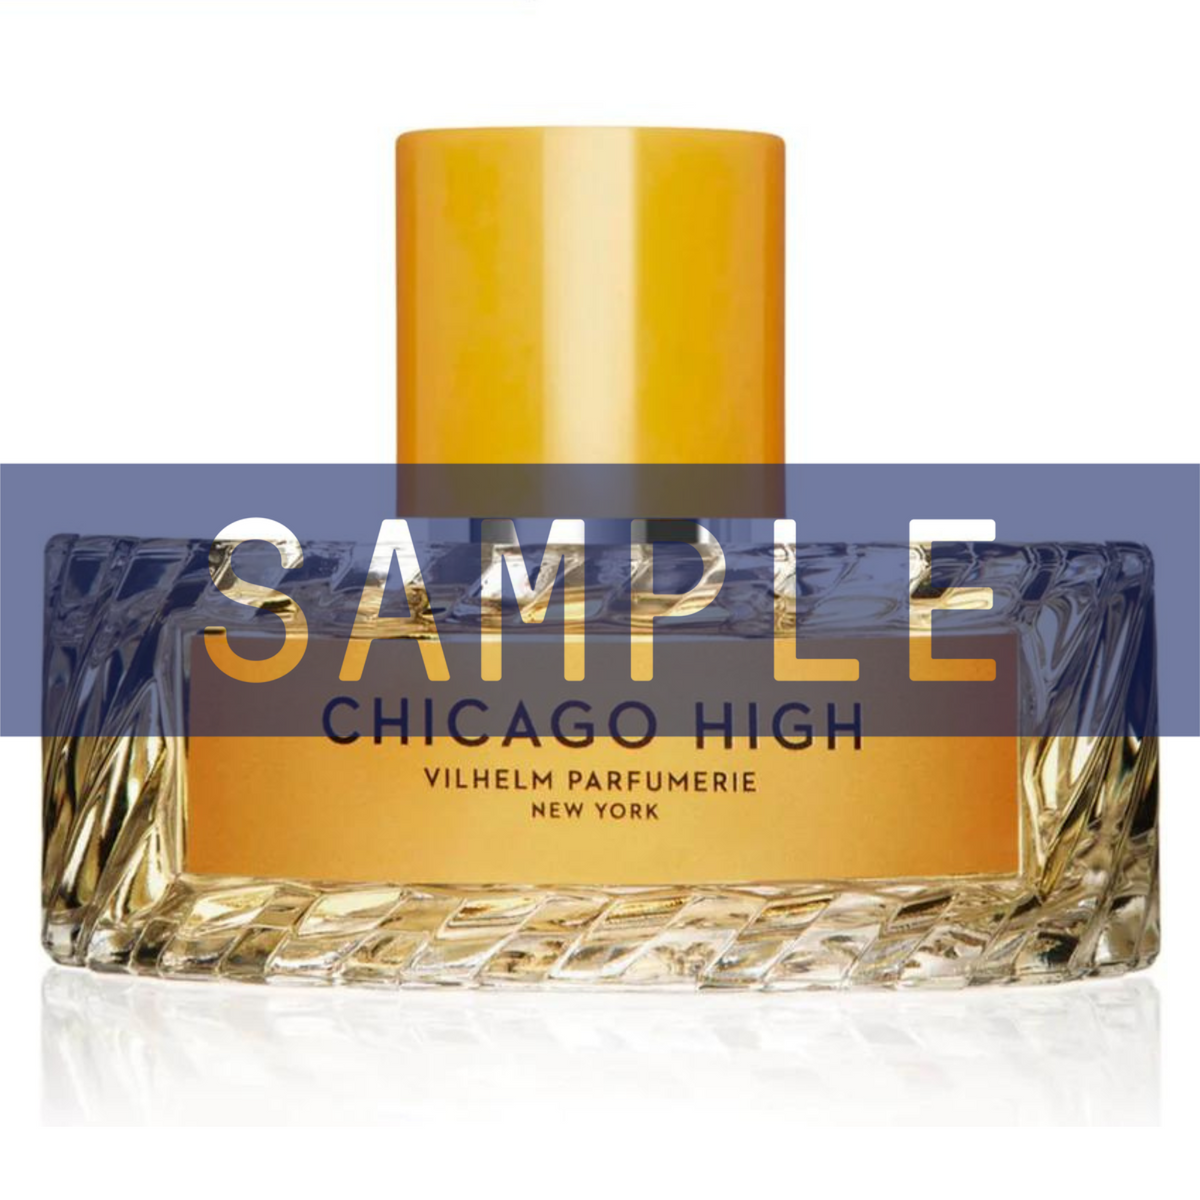 Primary Image of Sample - Chicago High Eau De Parfum